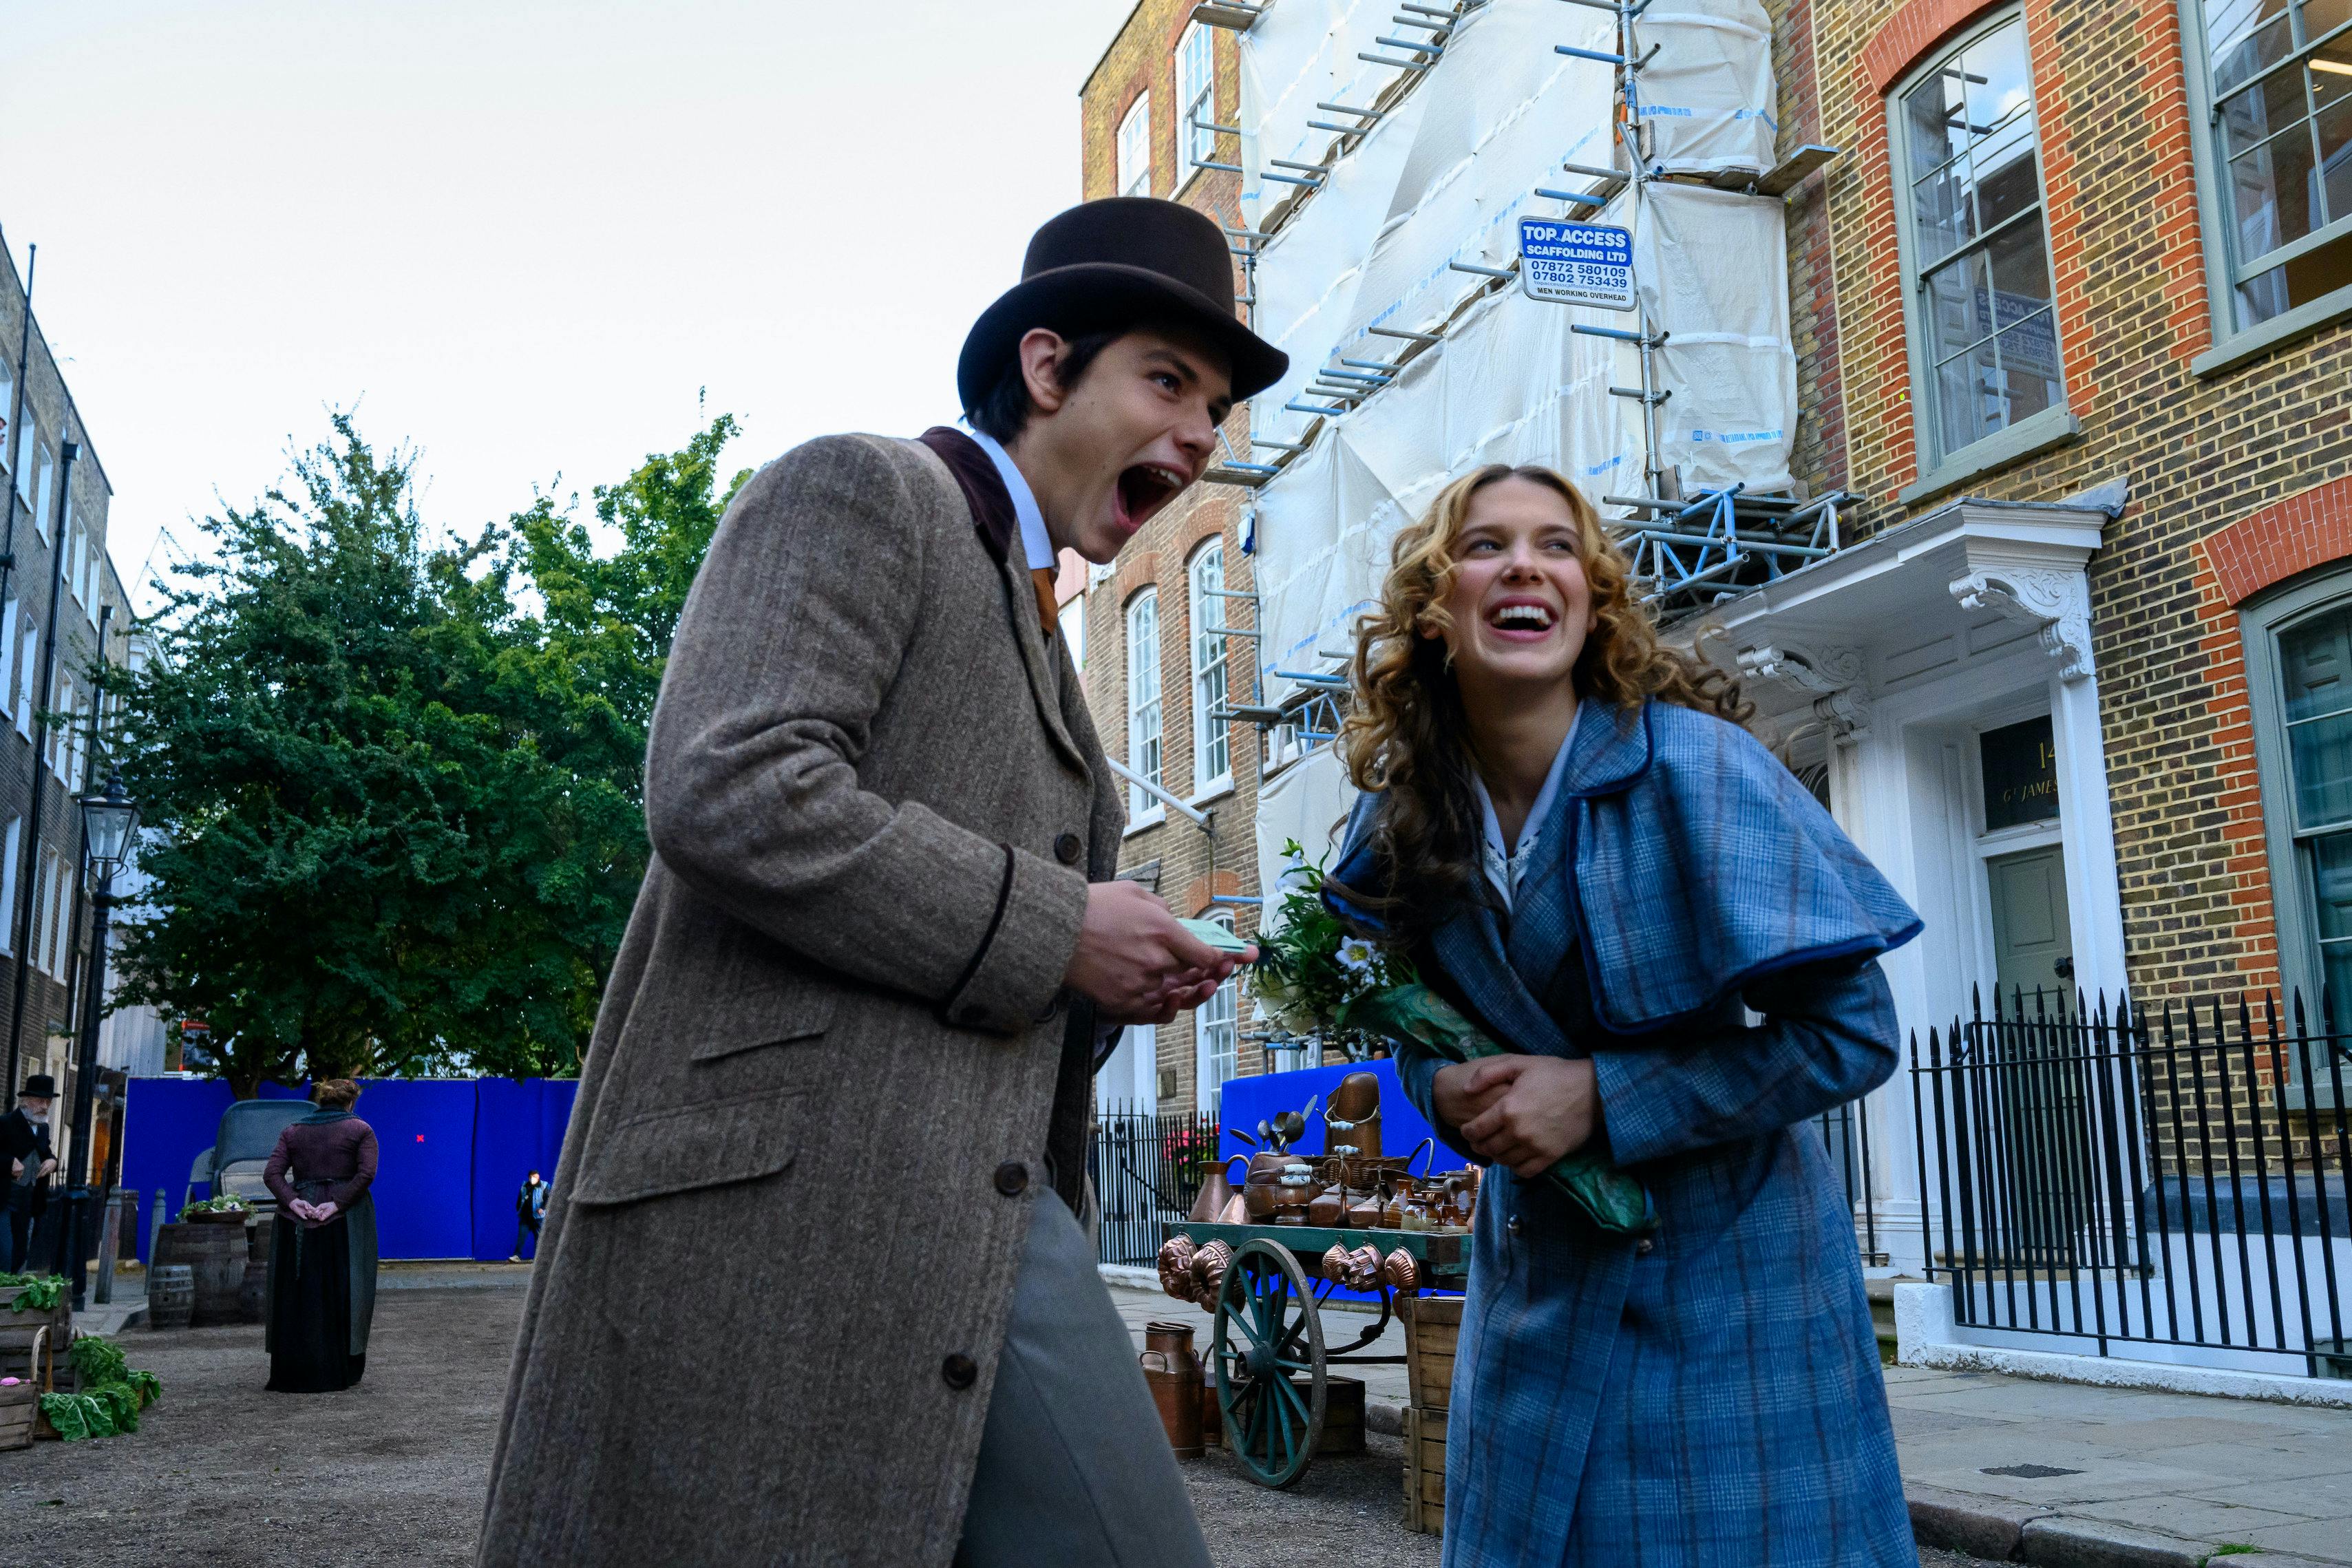  Tewkesbury (Louis Partridge) and Enola Holmes (Millie Bobby Brown) laugh in the street.